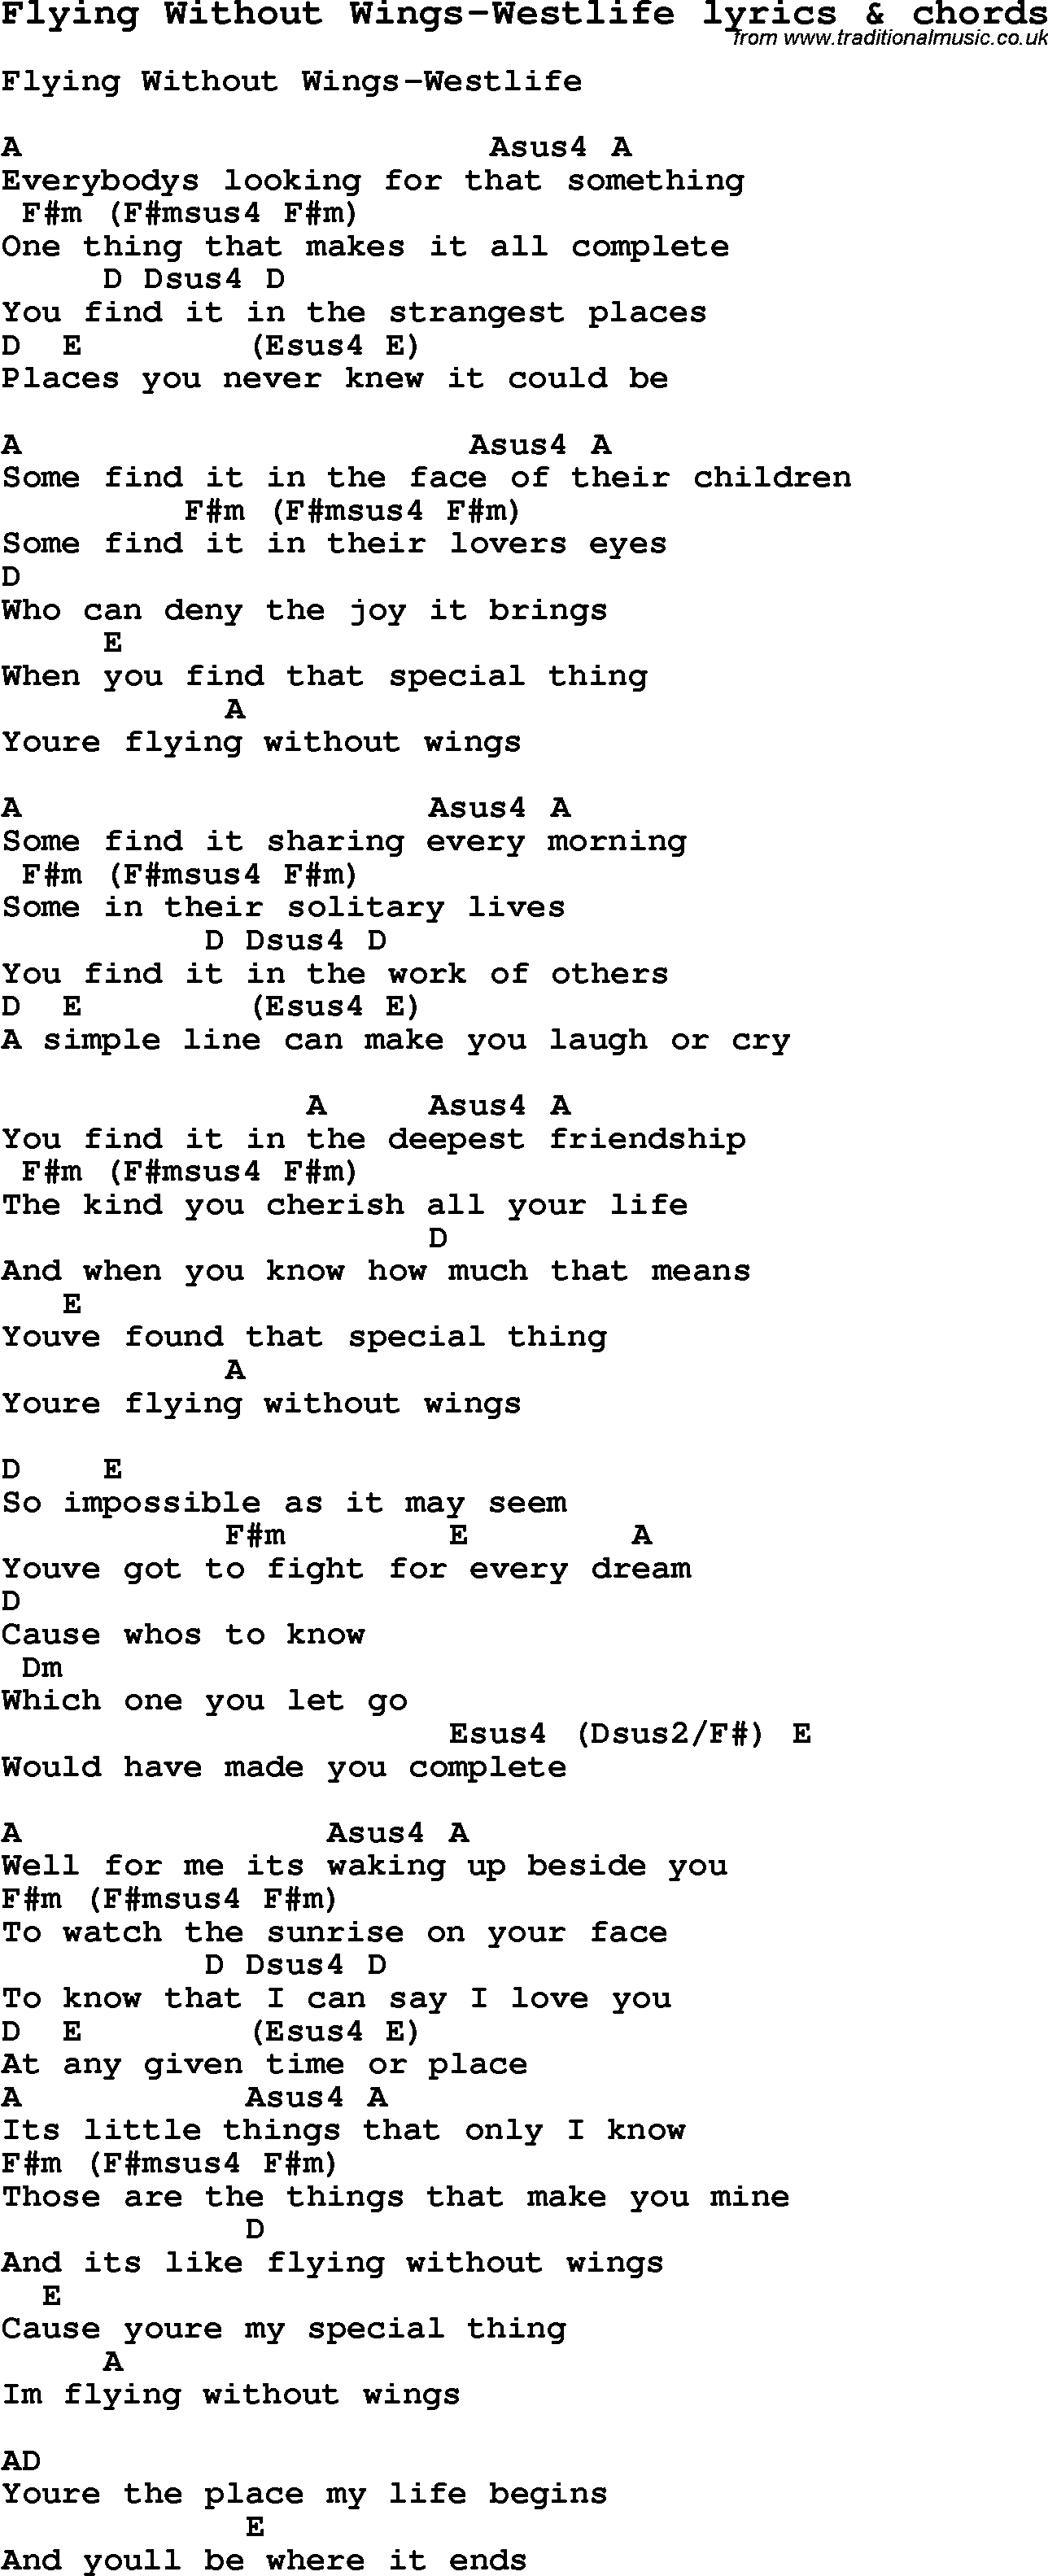 Love Song Lyrics for: Flying Without Wings-Westlife with chords for Ukulele, Guitar Banjo etc.